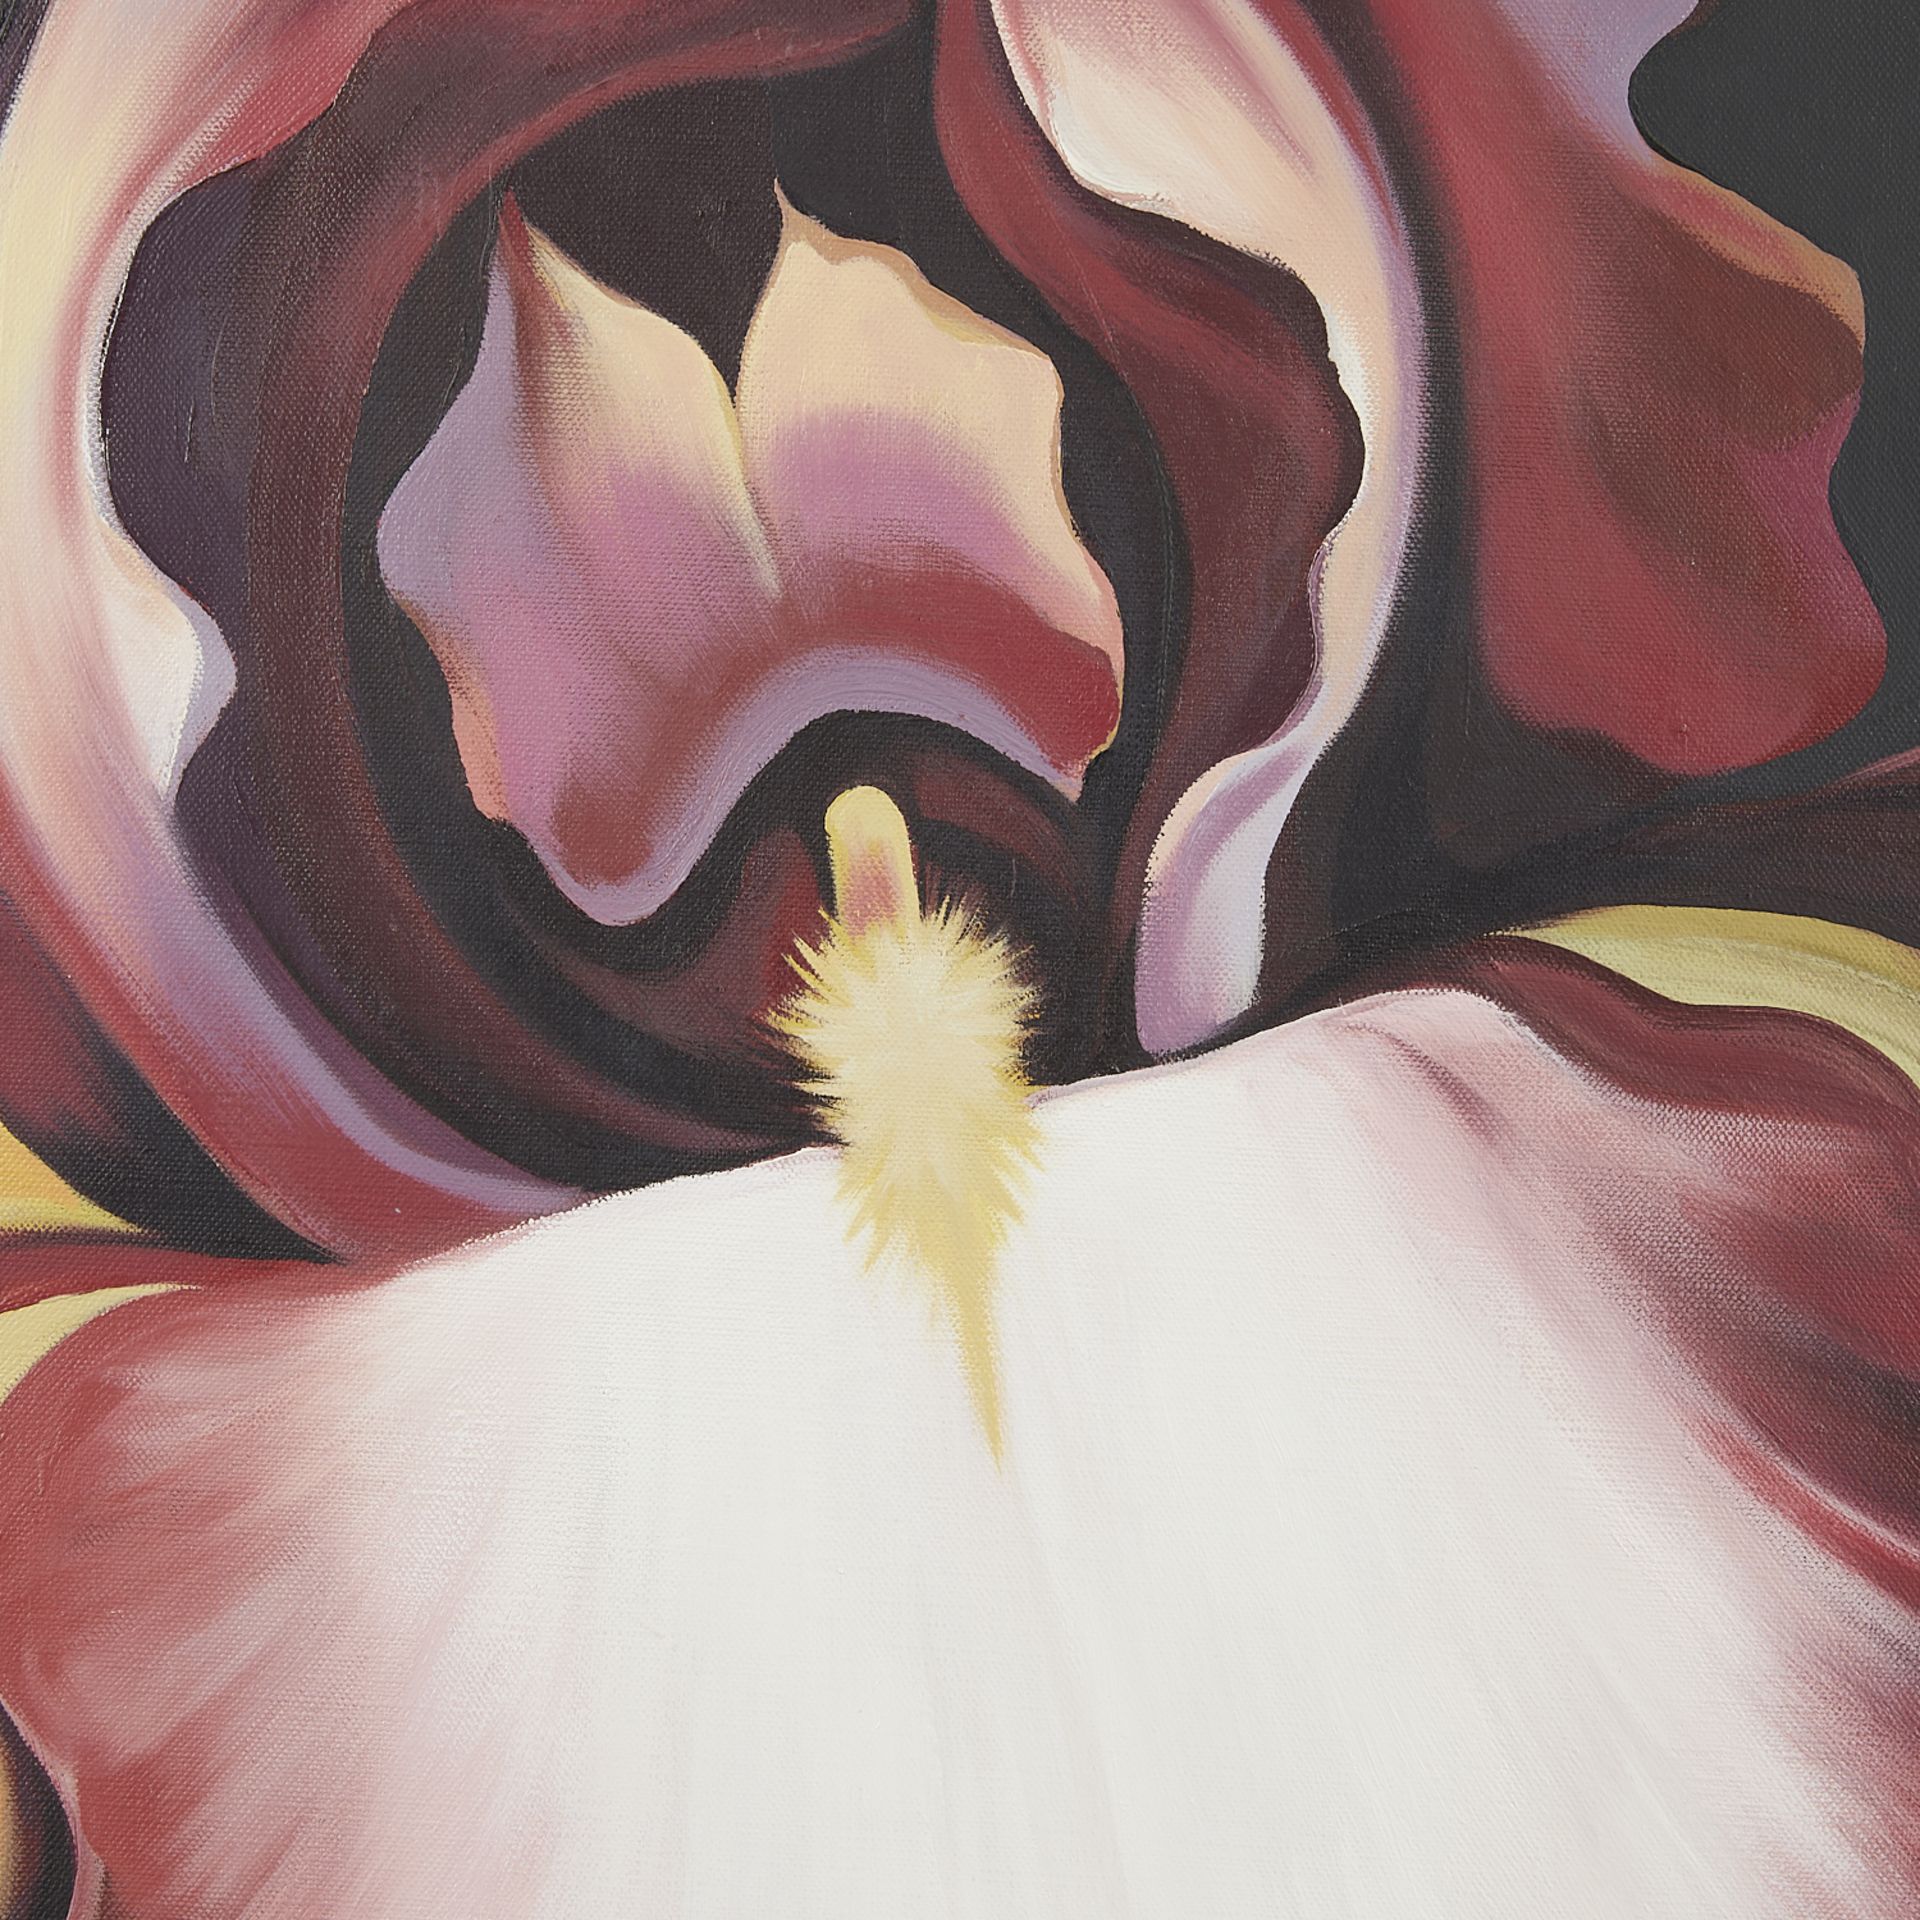 Lowell Nesbitt "Two Irises on Black" Oil on Canvas - Image 2 of 9